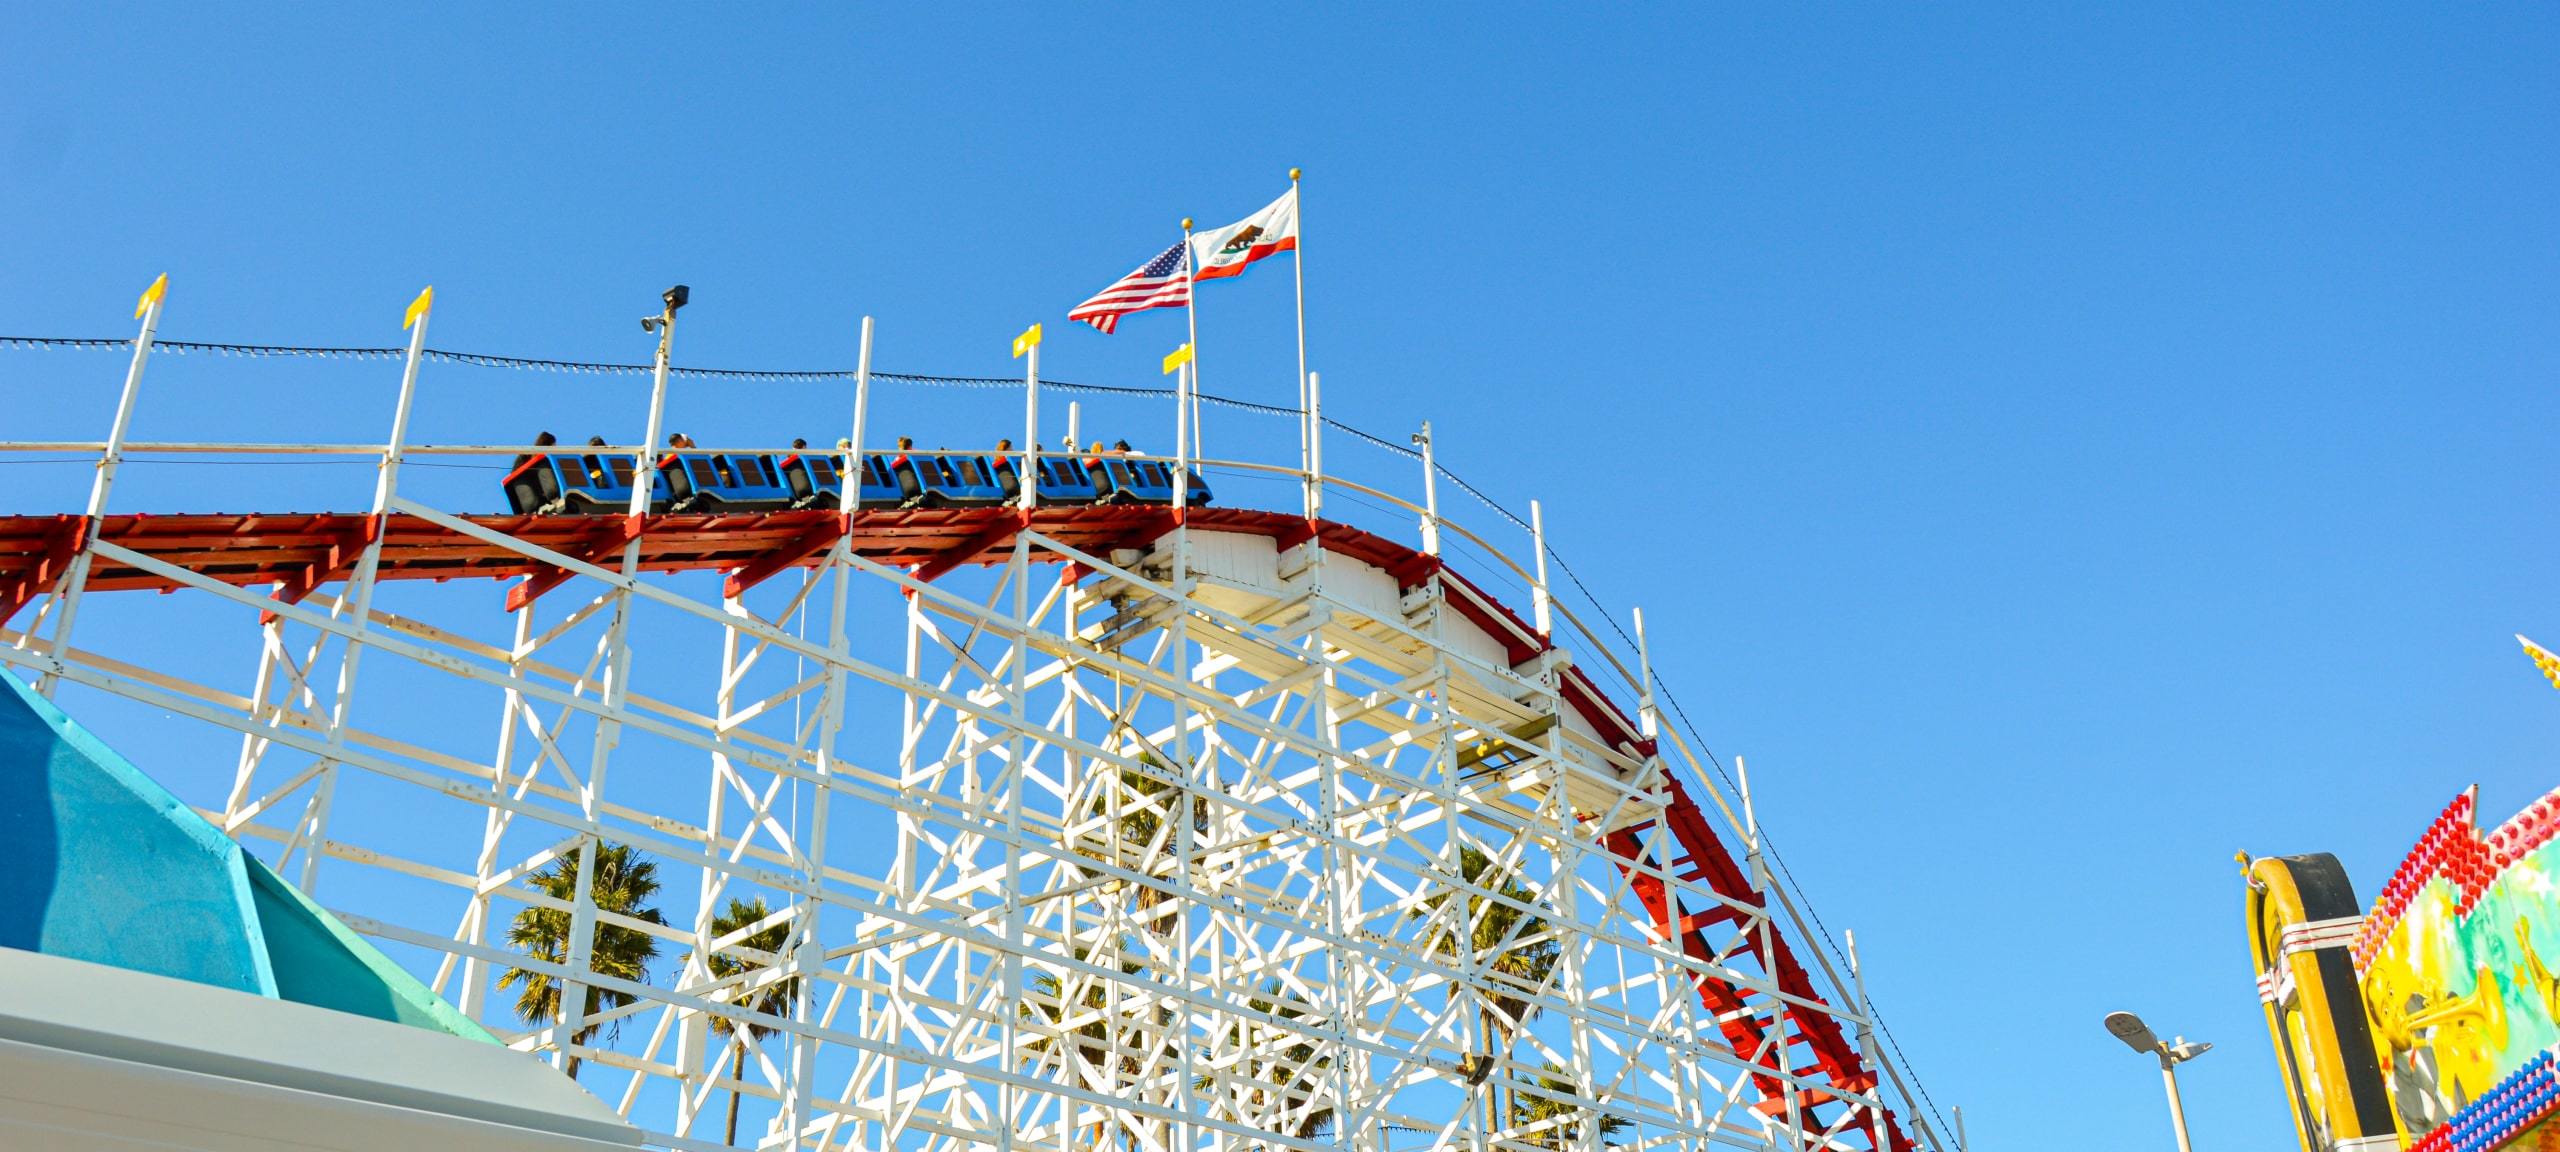 Upwards view of rollercoaster at Santa Cruz Boardwalk during summertime. Sourajit Karmakar on Unsplash